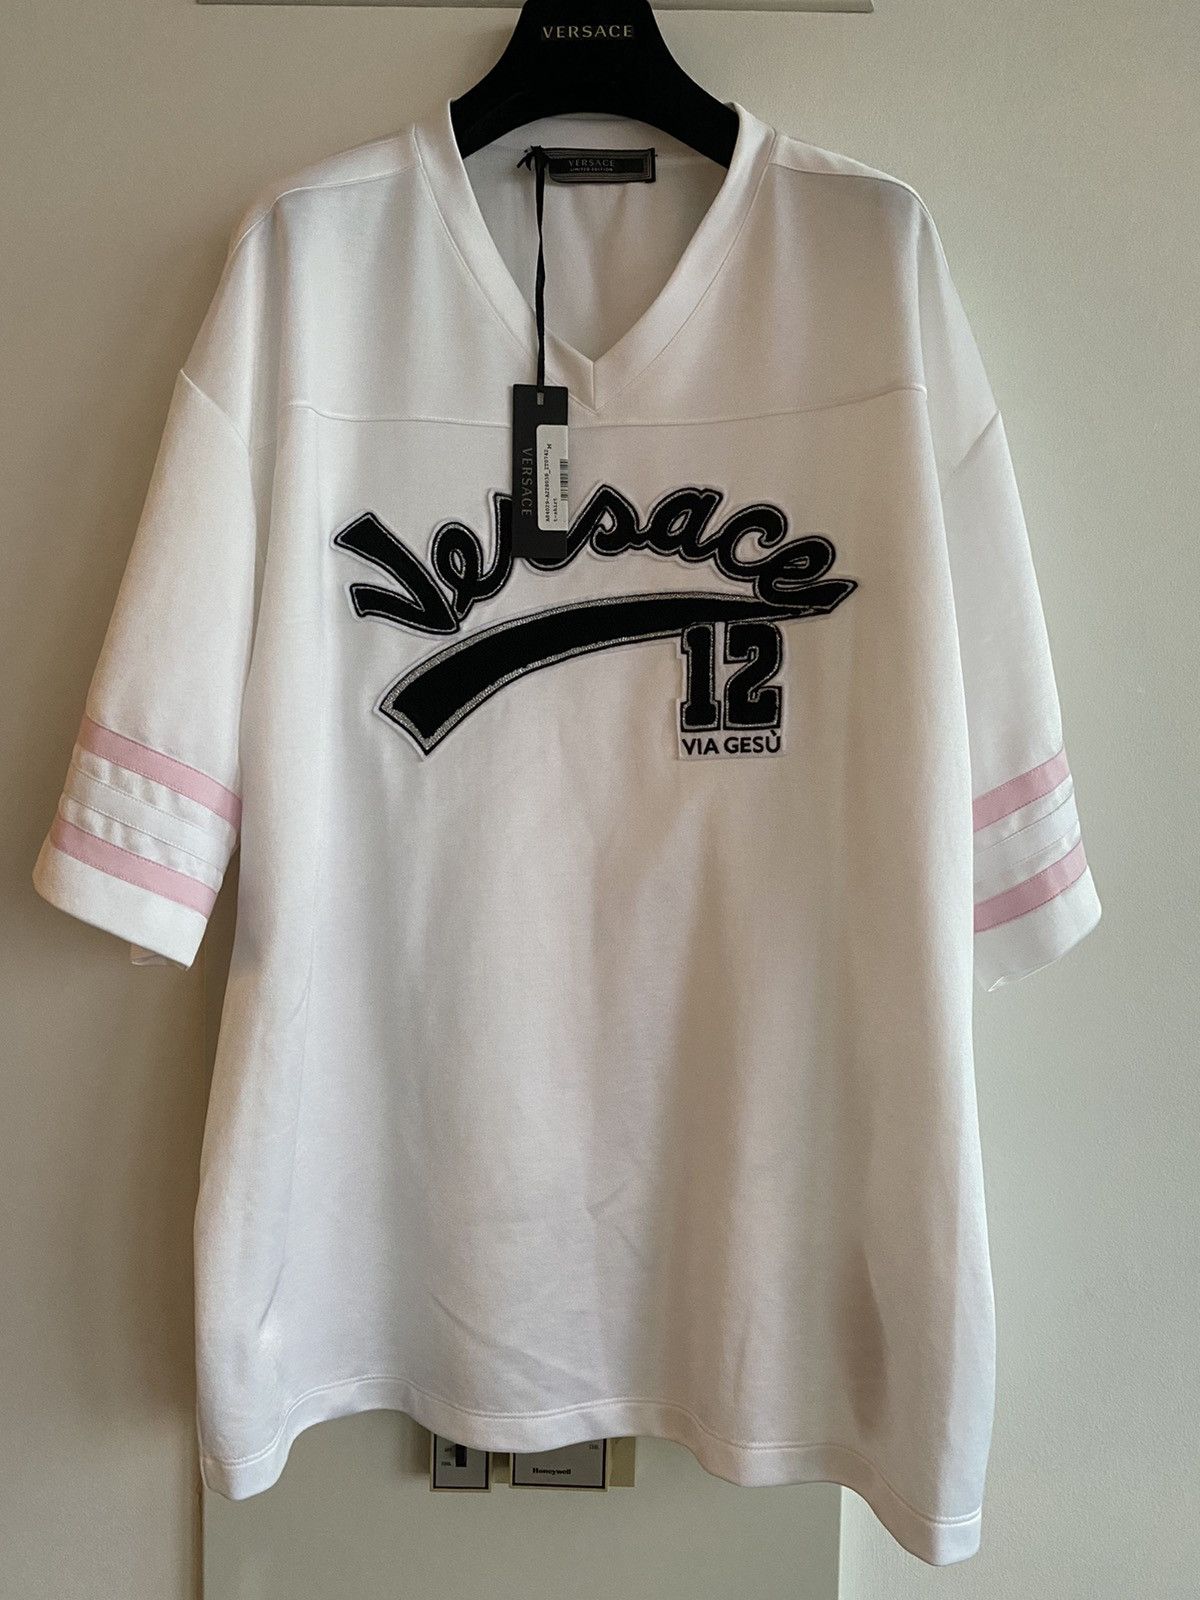 Versace Limited Edition Via Gesu Runway Jersey T-shirt $1,050 New Size US L / EU 52-54 / 3 - 5 Thumbnail